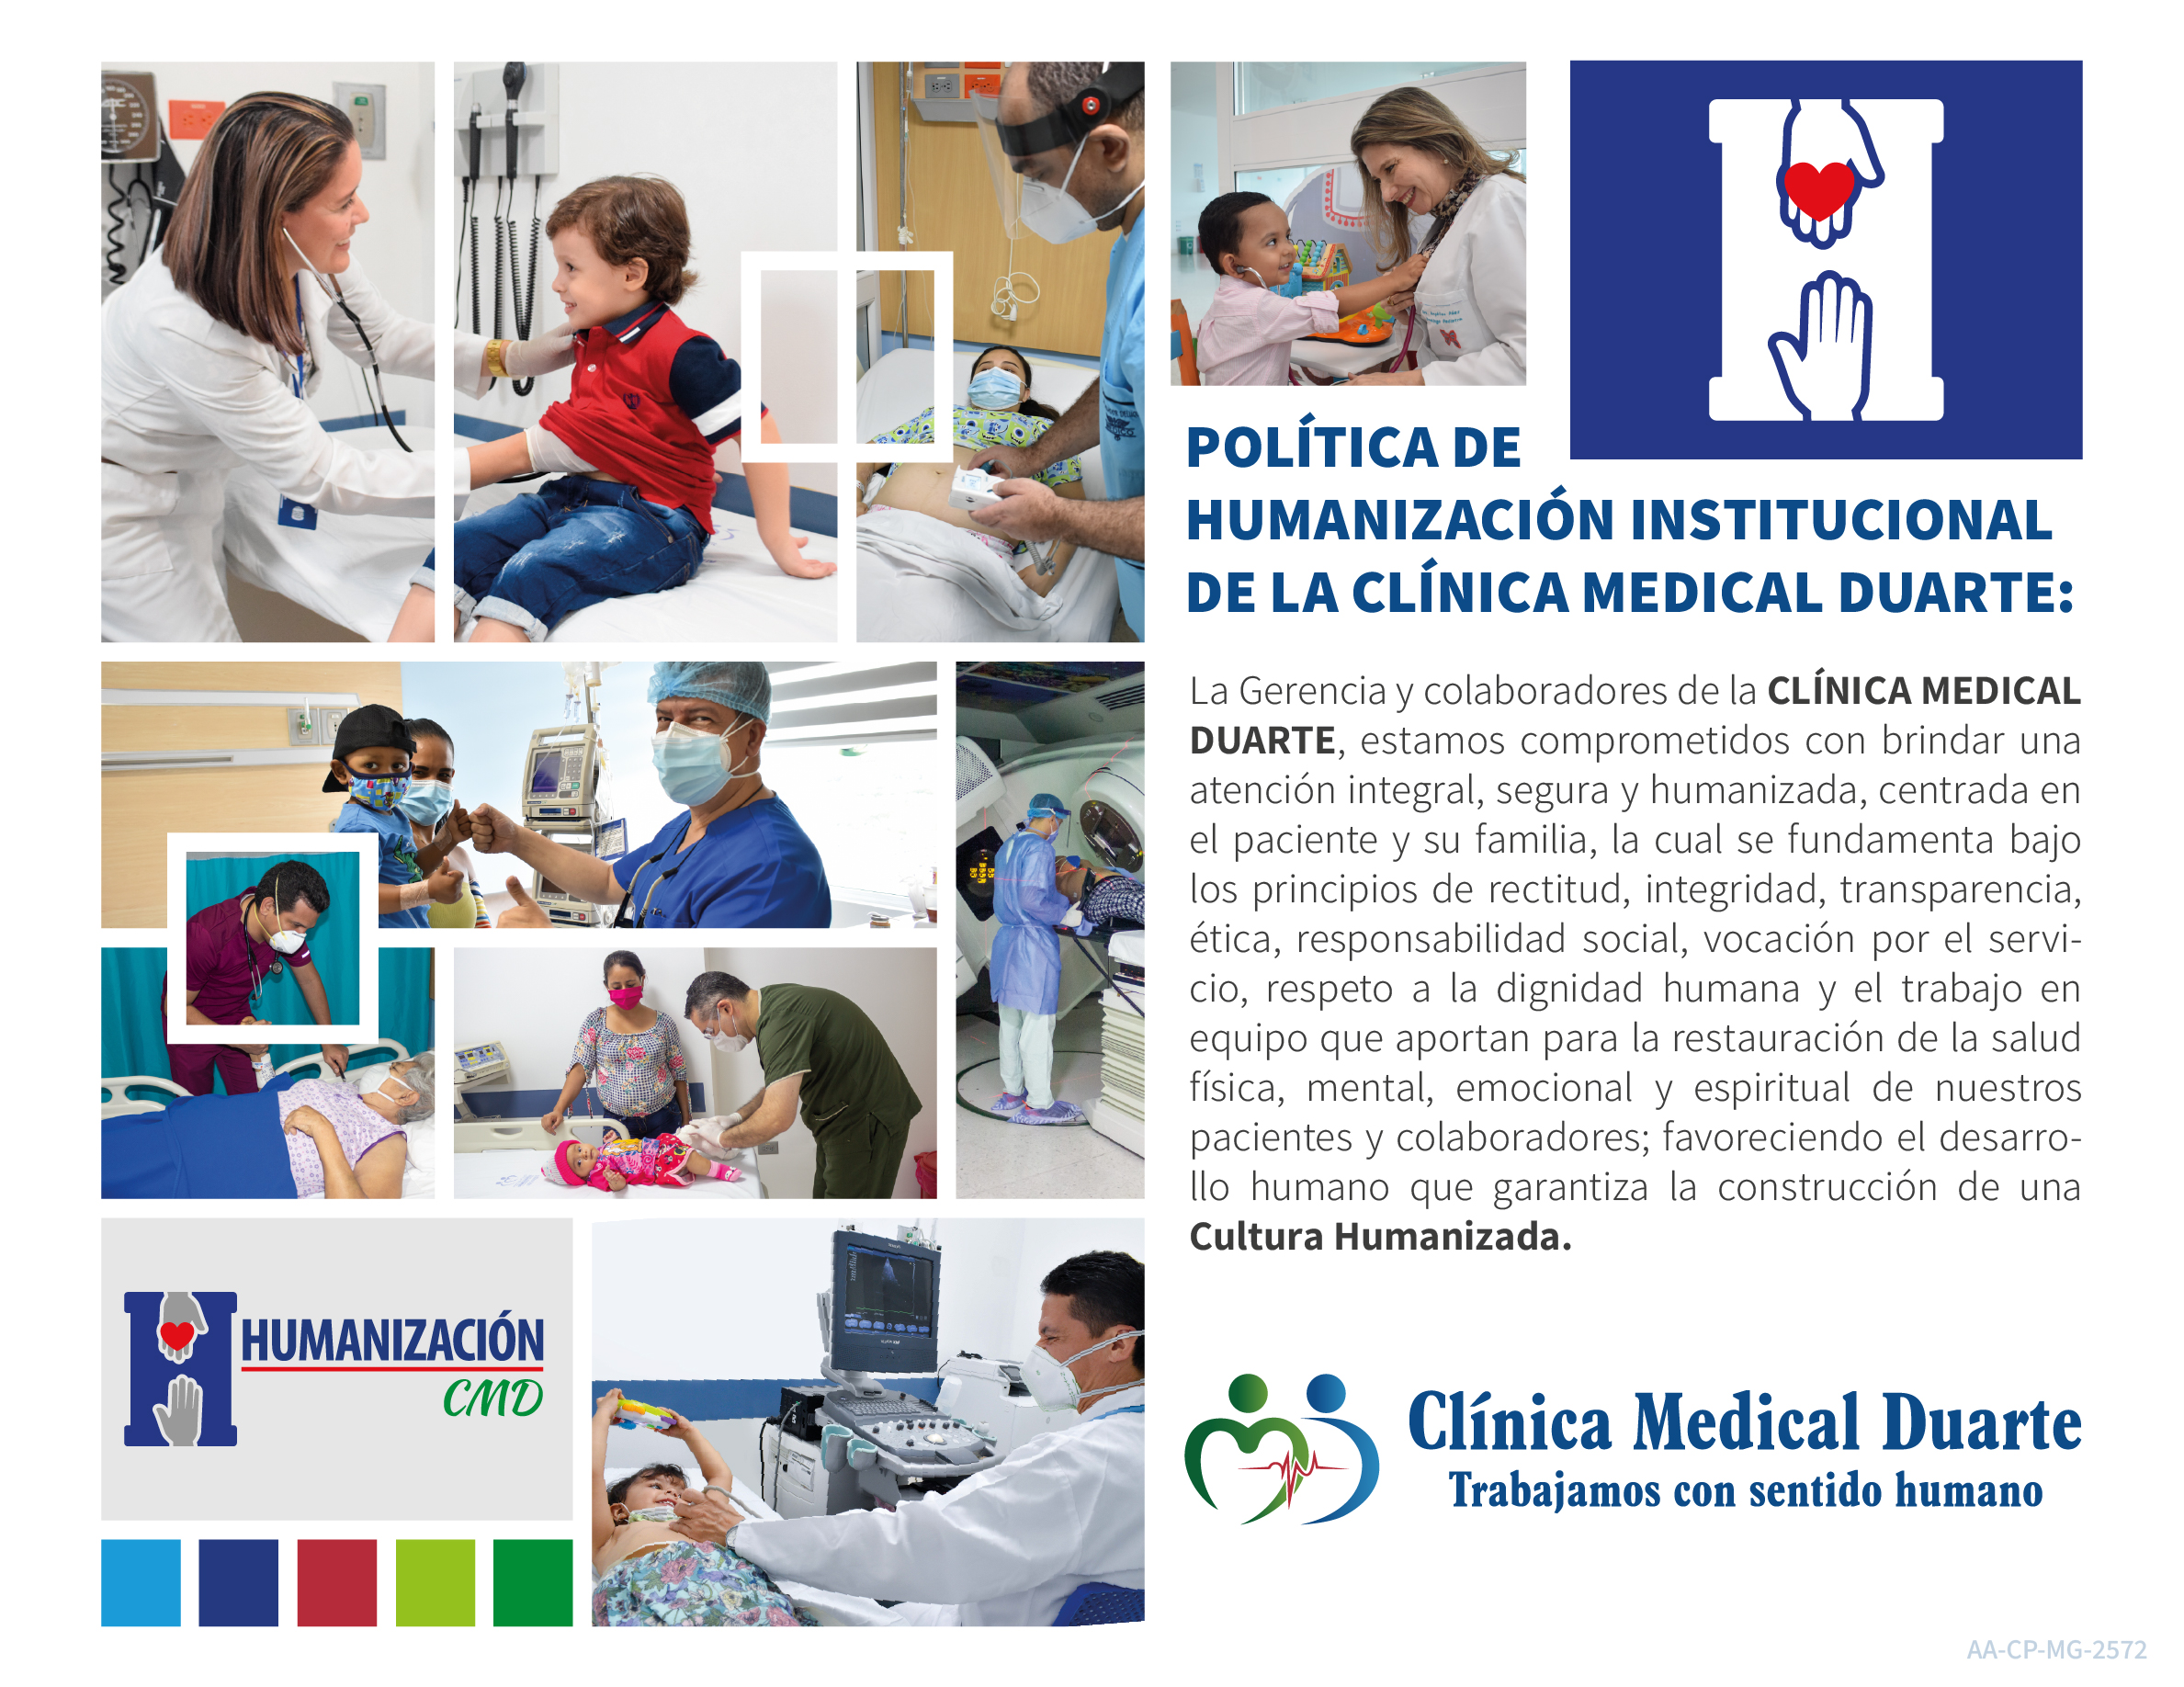 Politica-de-Humanizacion-Institucional-de-la-Clinica-Medical-Duarte